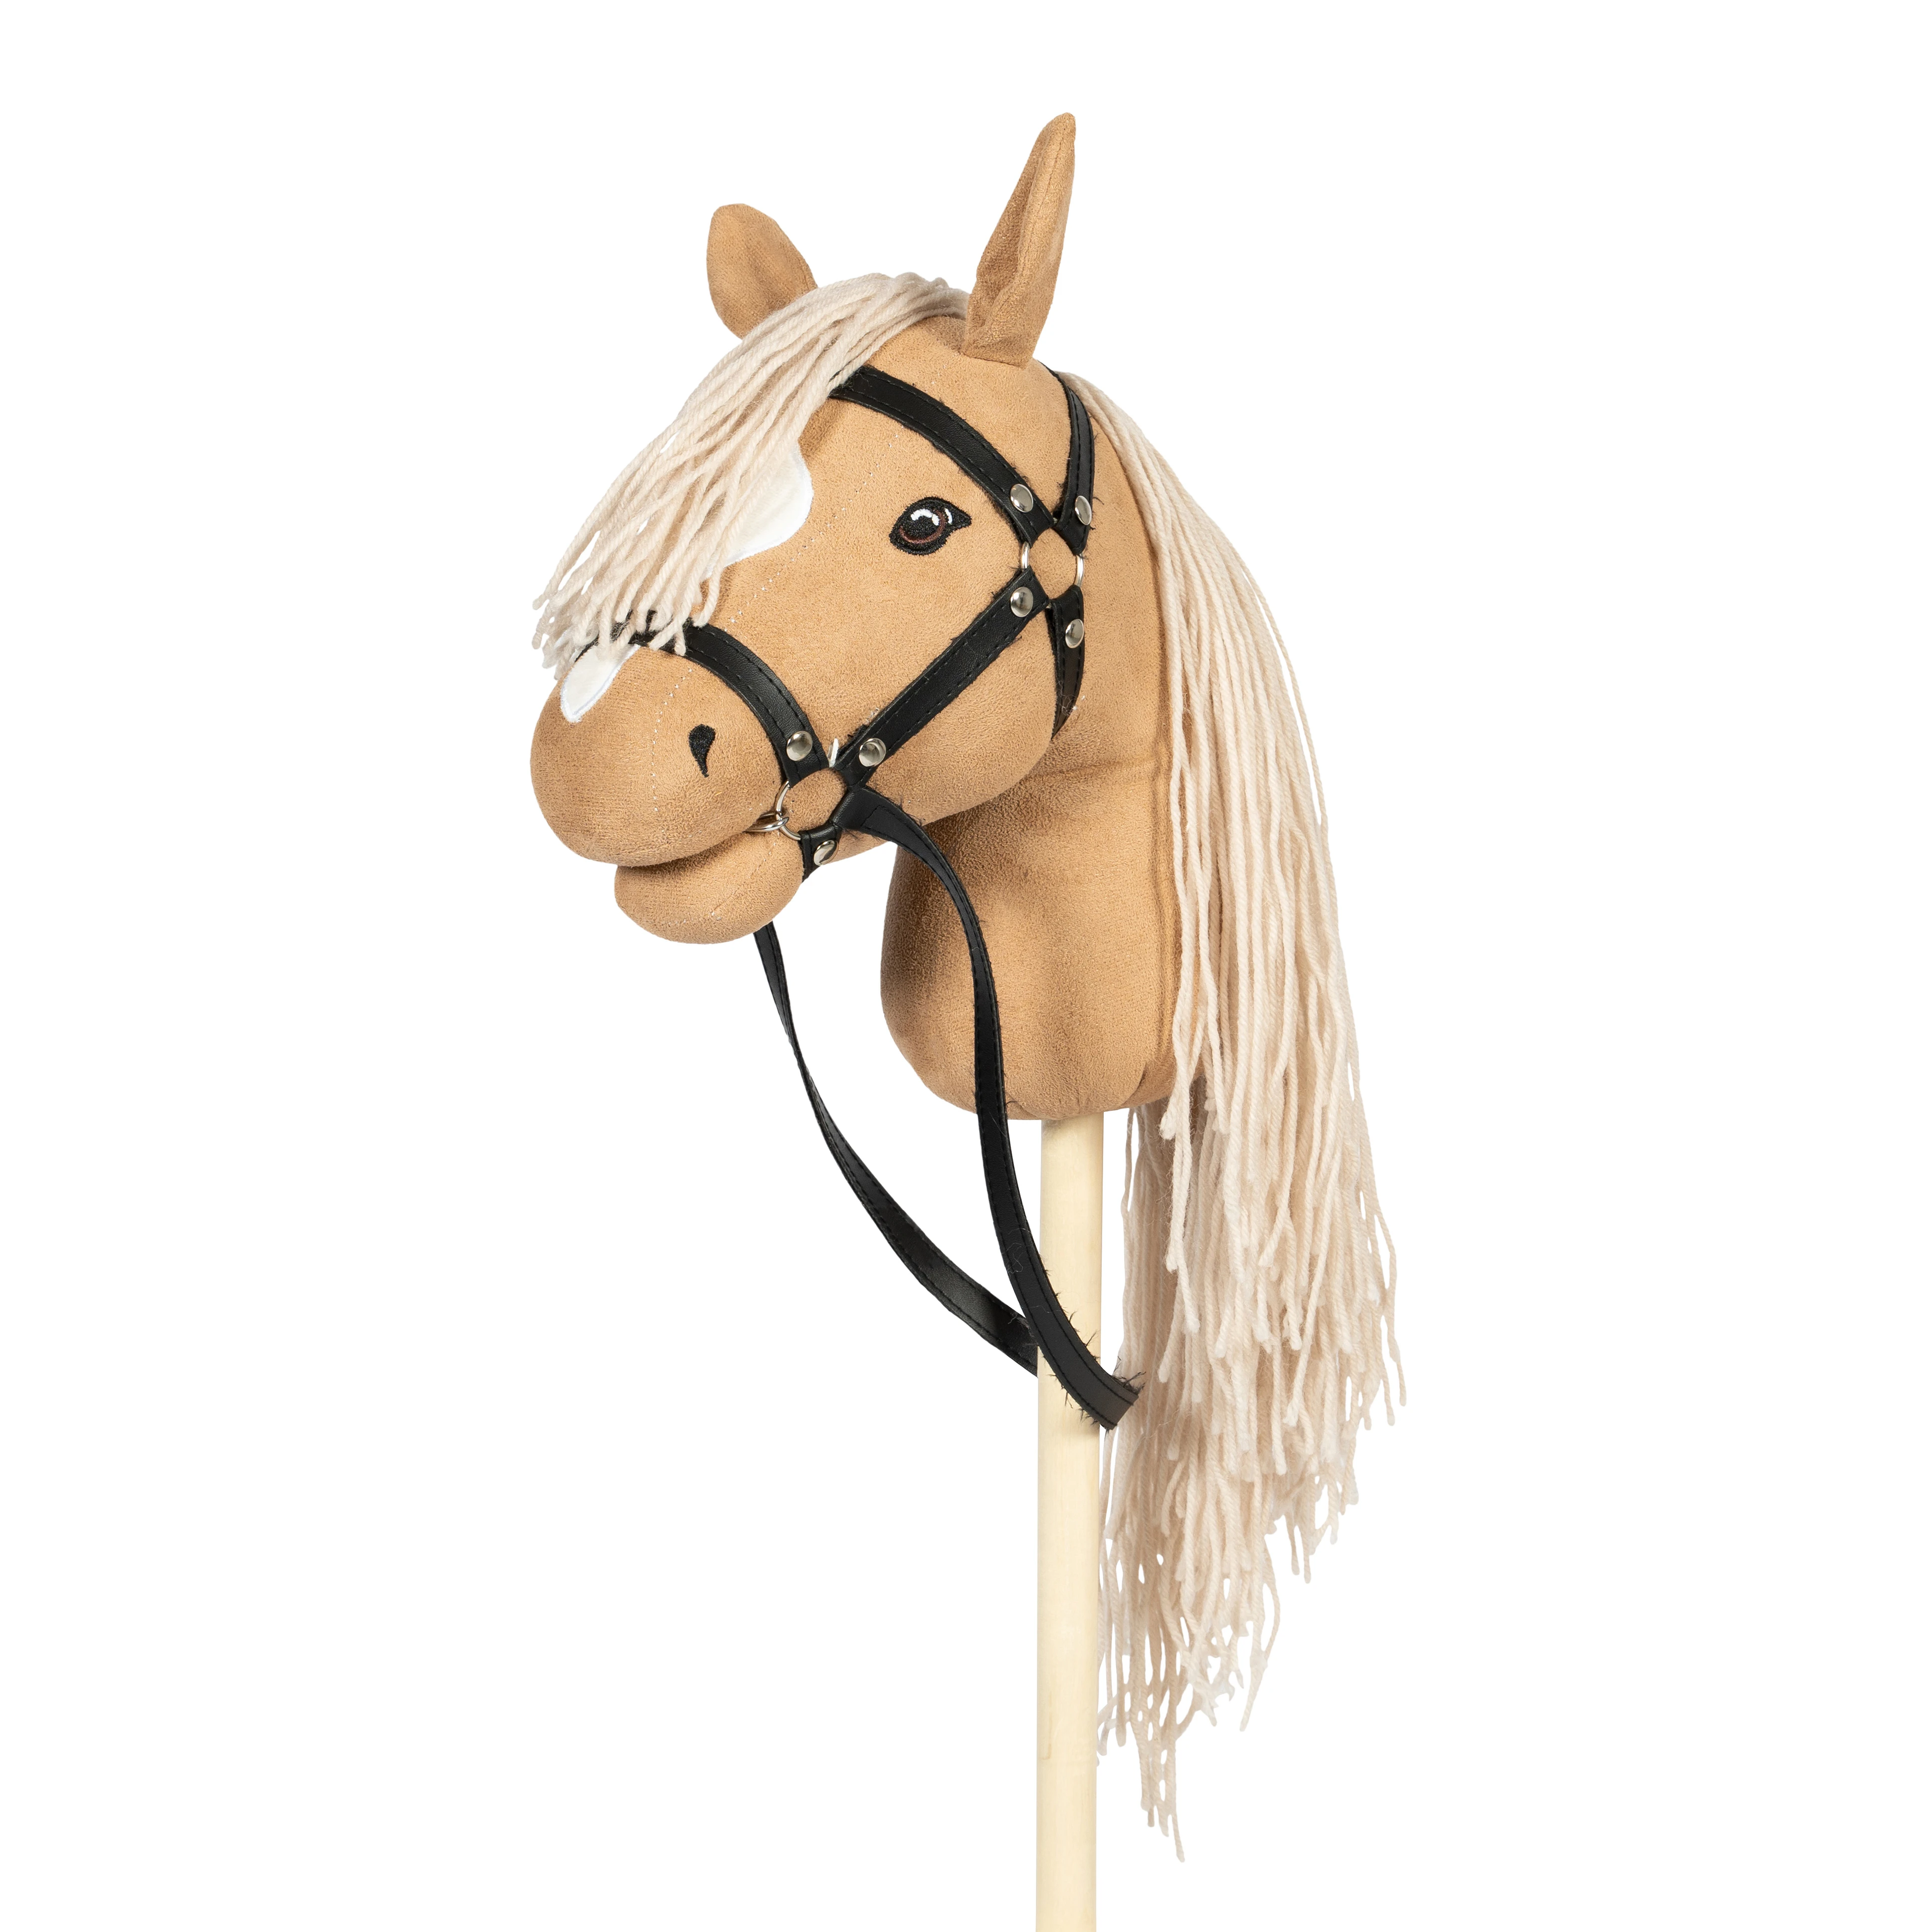 Accessories hobby horse - KhtAriaShop